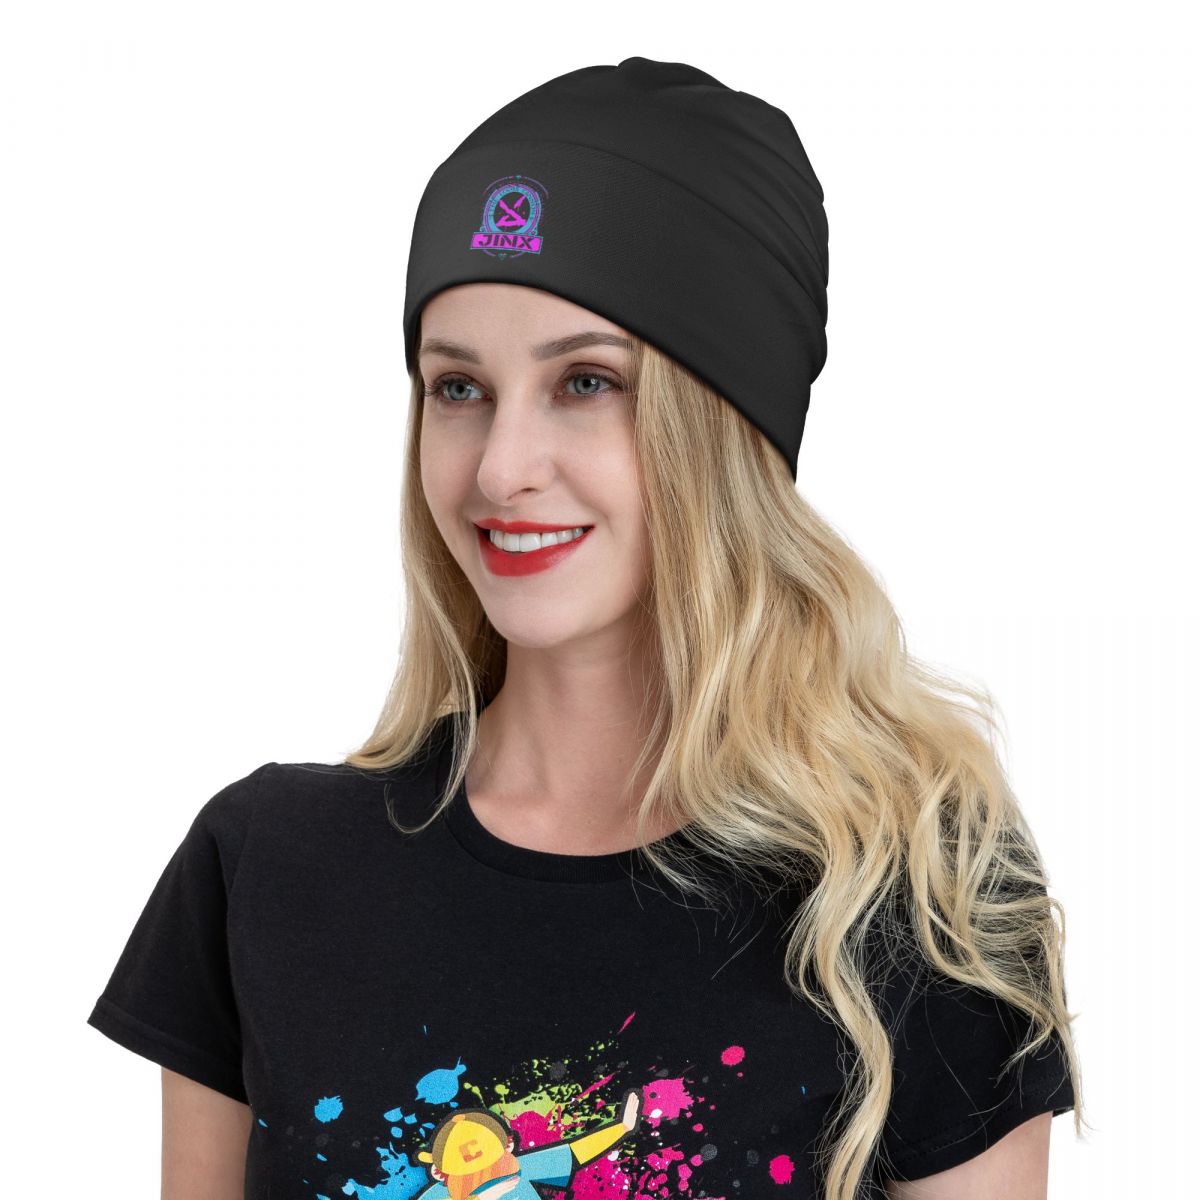 JINX Knitted Cuff Hats Soft Beanies - League of Legends Fan Store